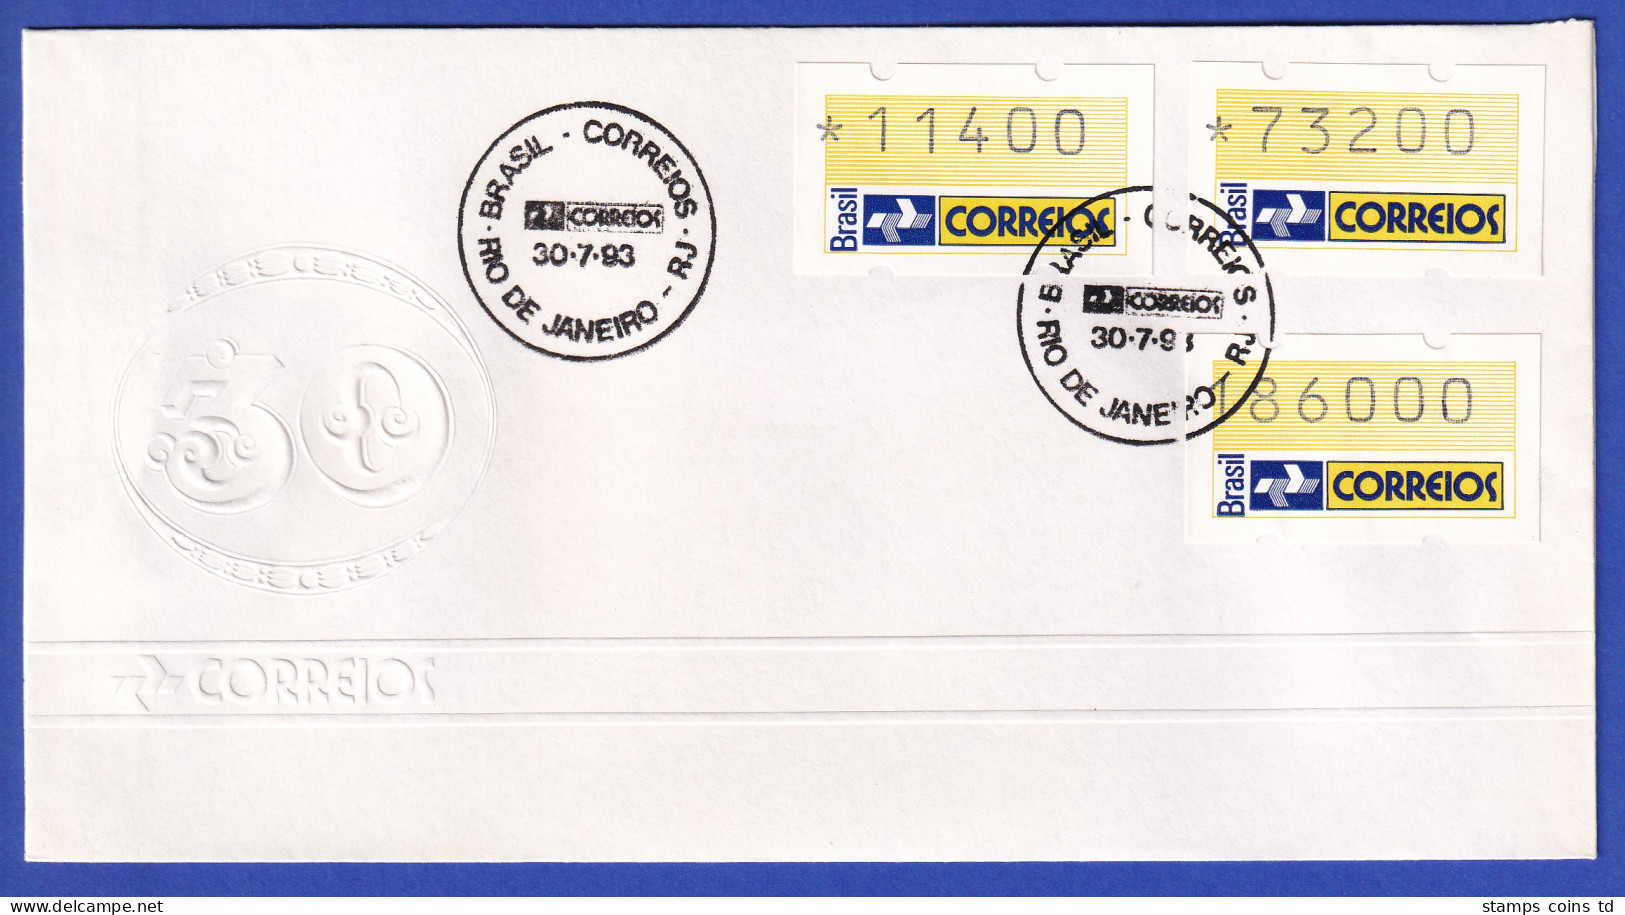 Brasilien 1993 ATM Postemblem Satz 11400-73200-186000 Auf  FDC Mit So-O 30.7.93 - Franking Labels